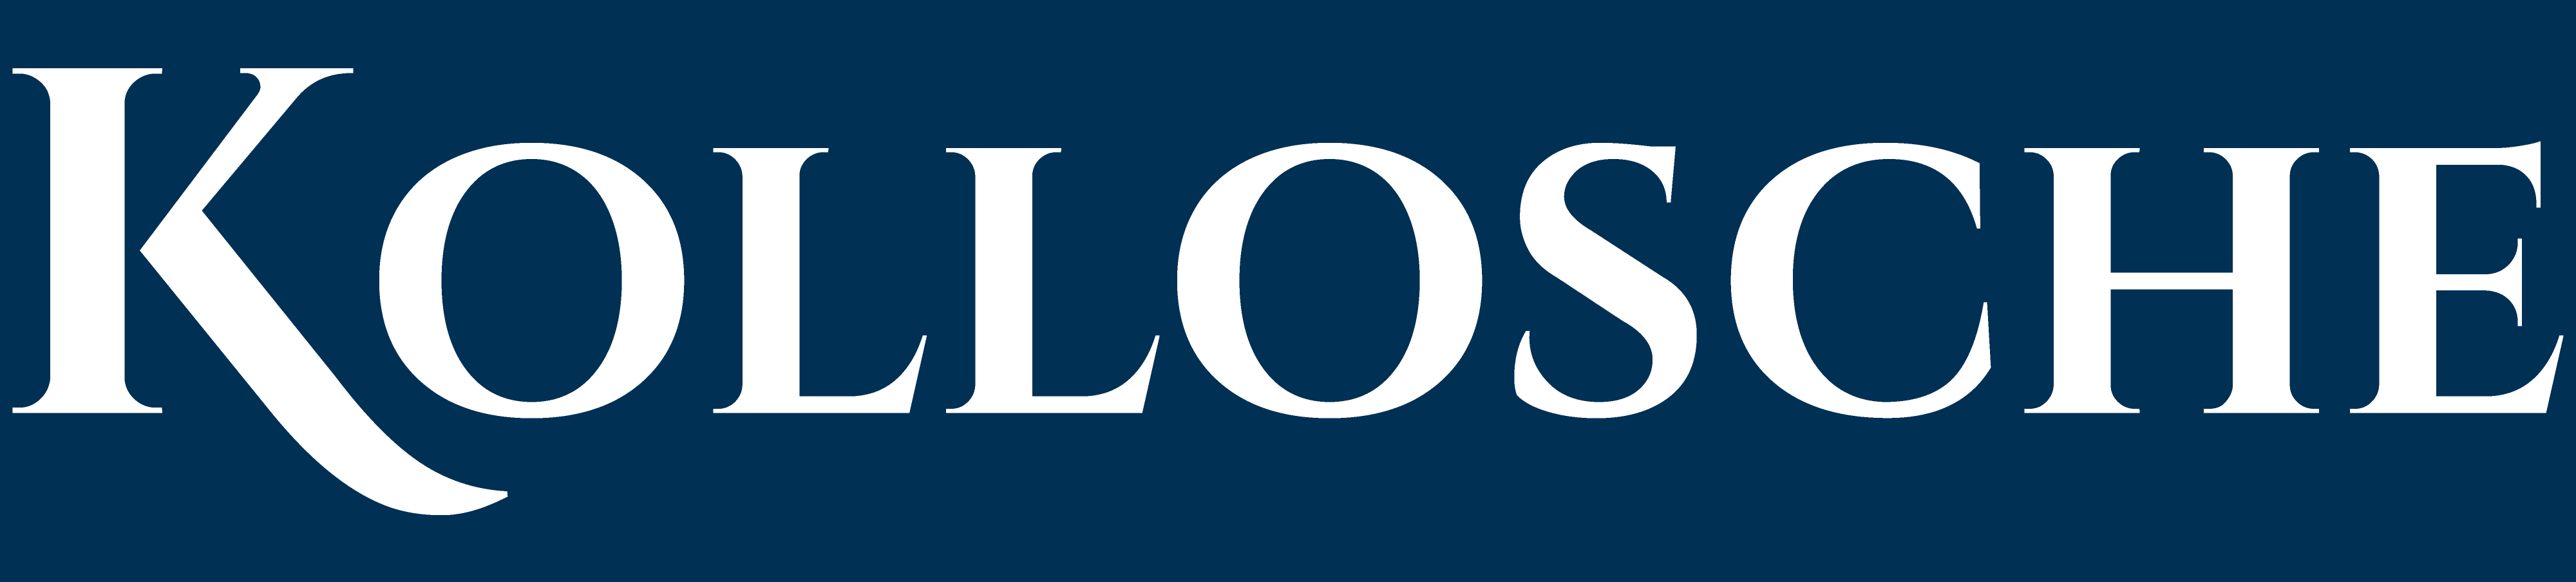 jpg-large-kollosche-reverse-logo